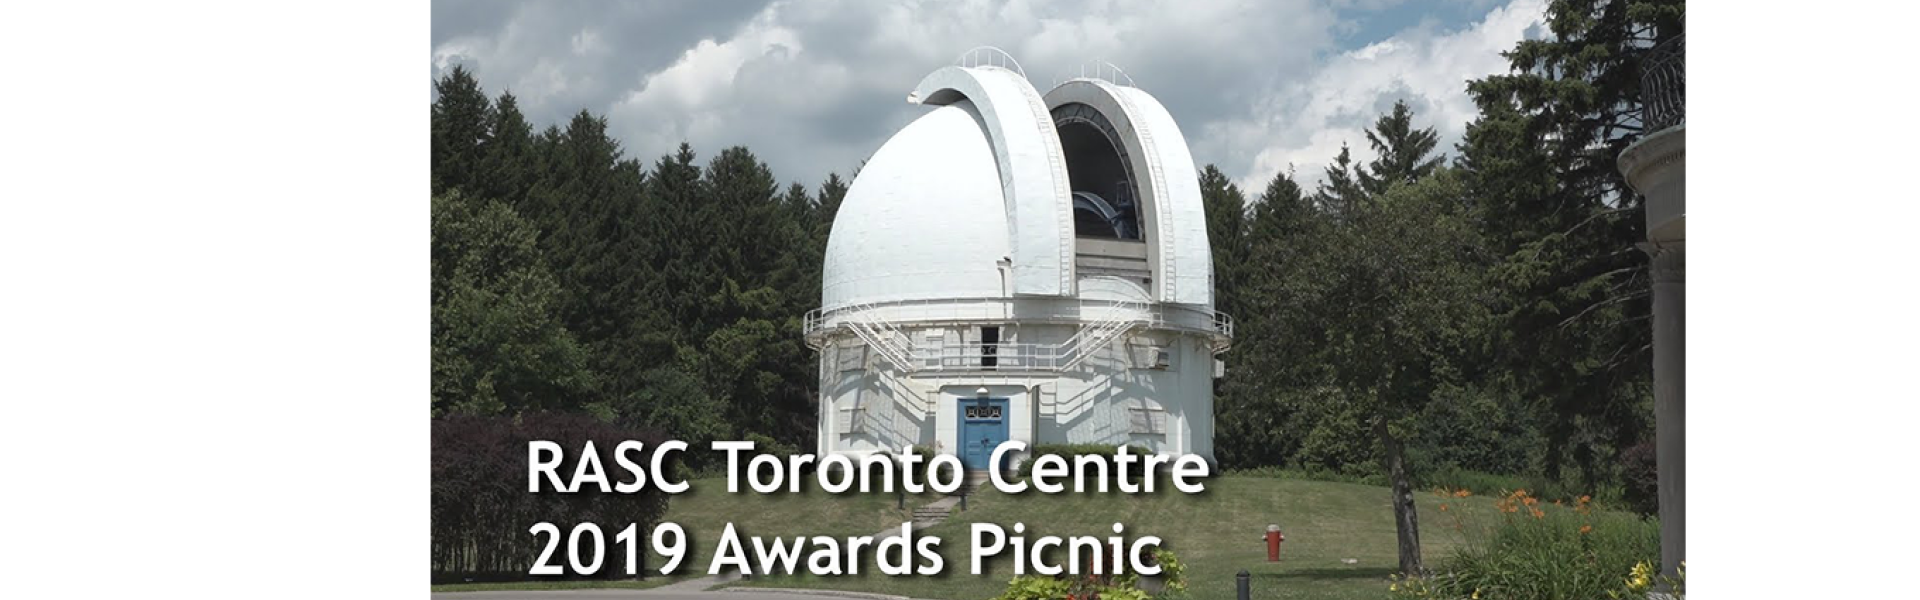 RASC-TC Awards Picnic 2019